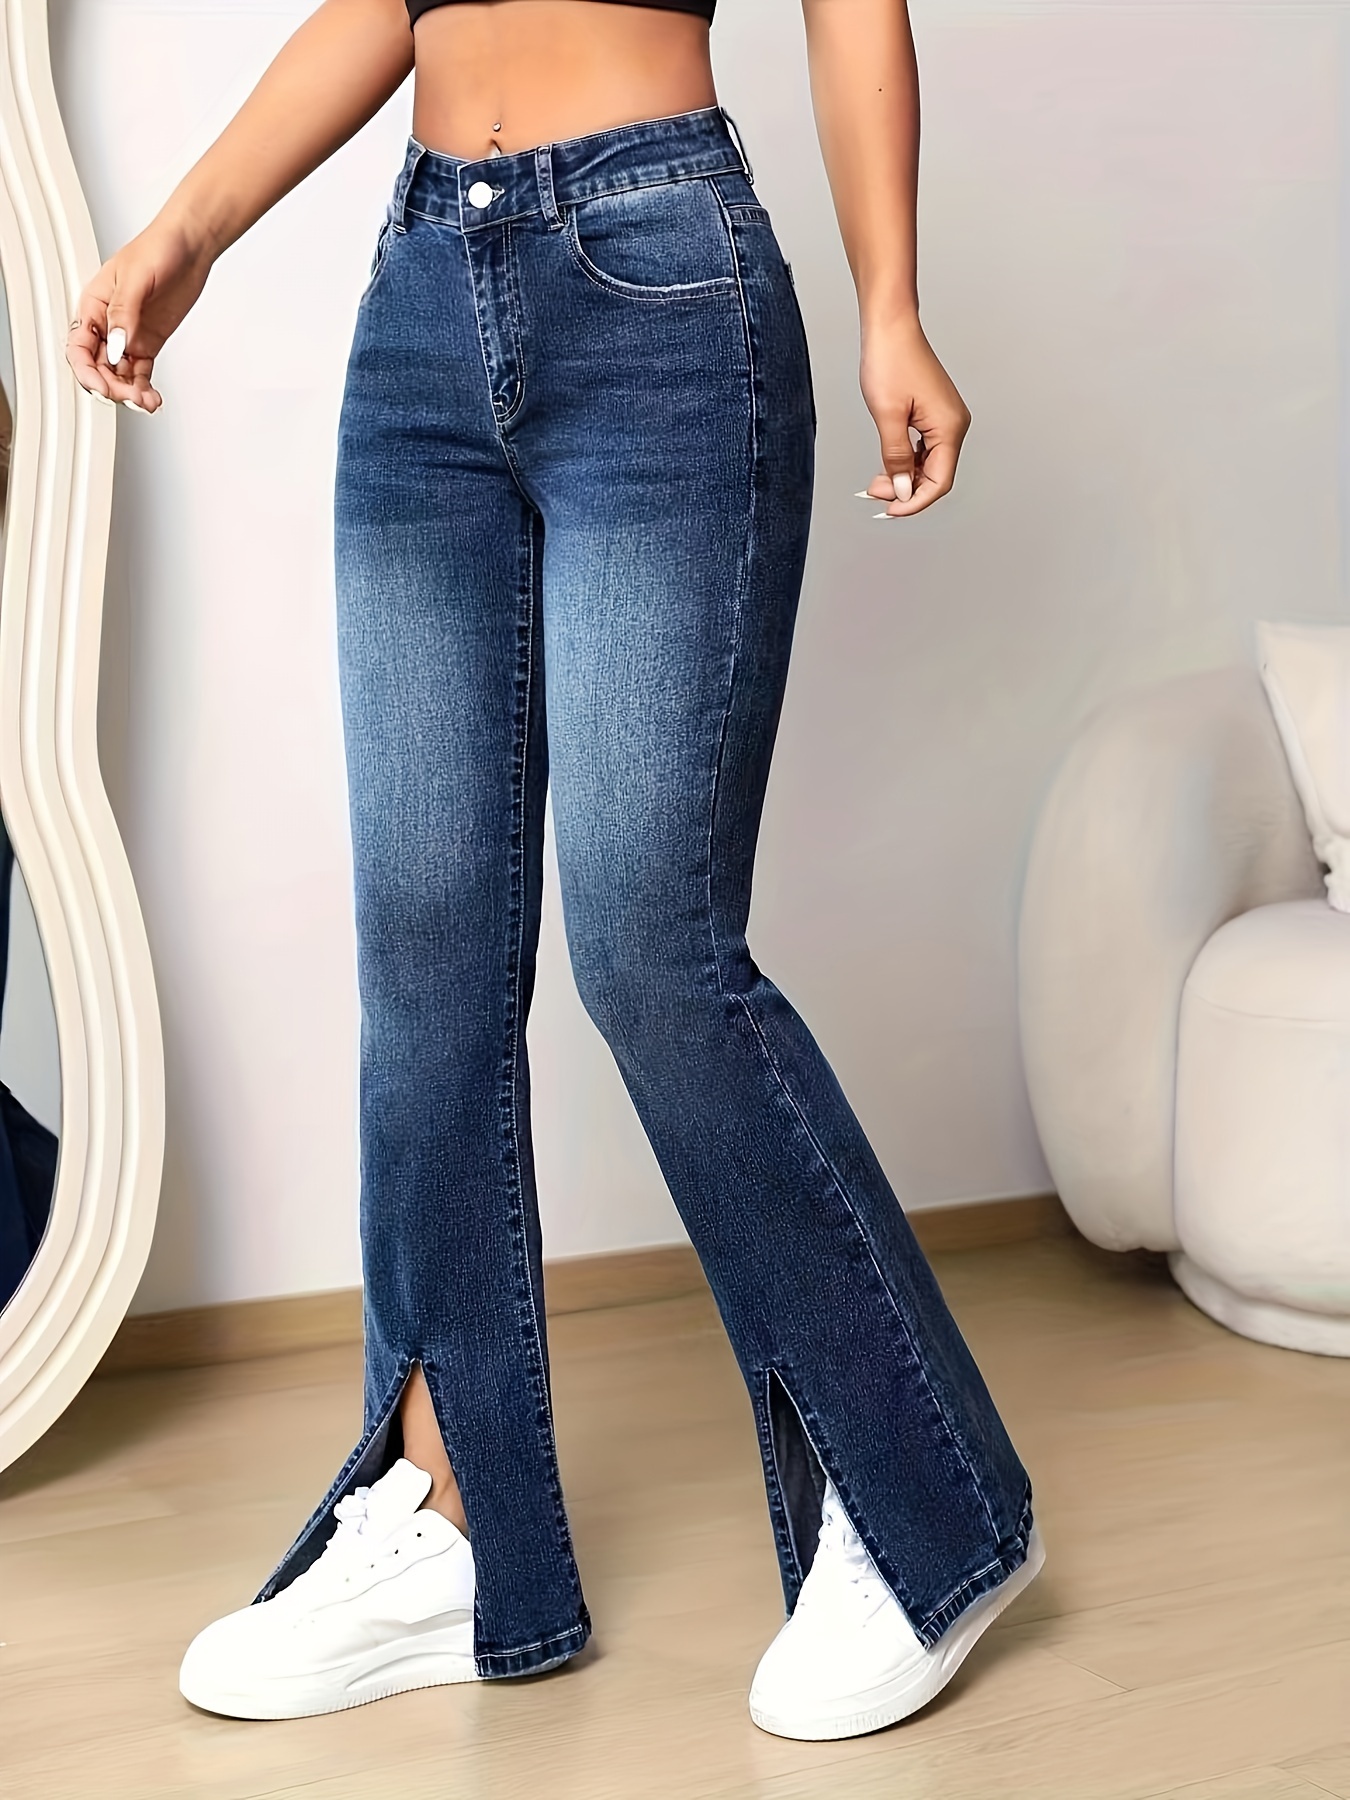 Flared jeans with slit hem